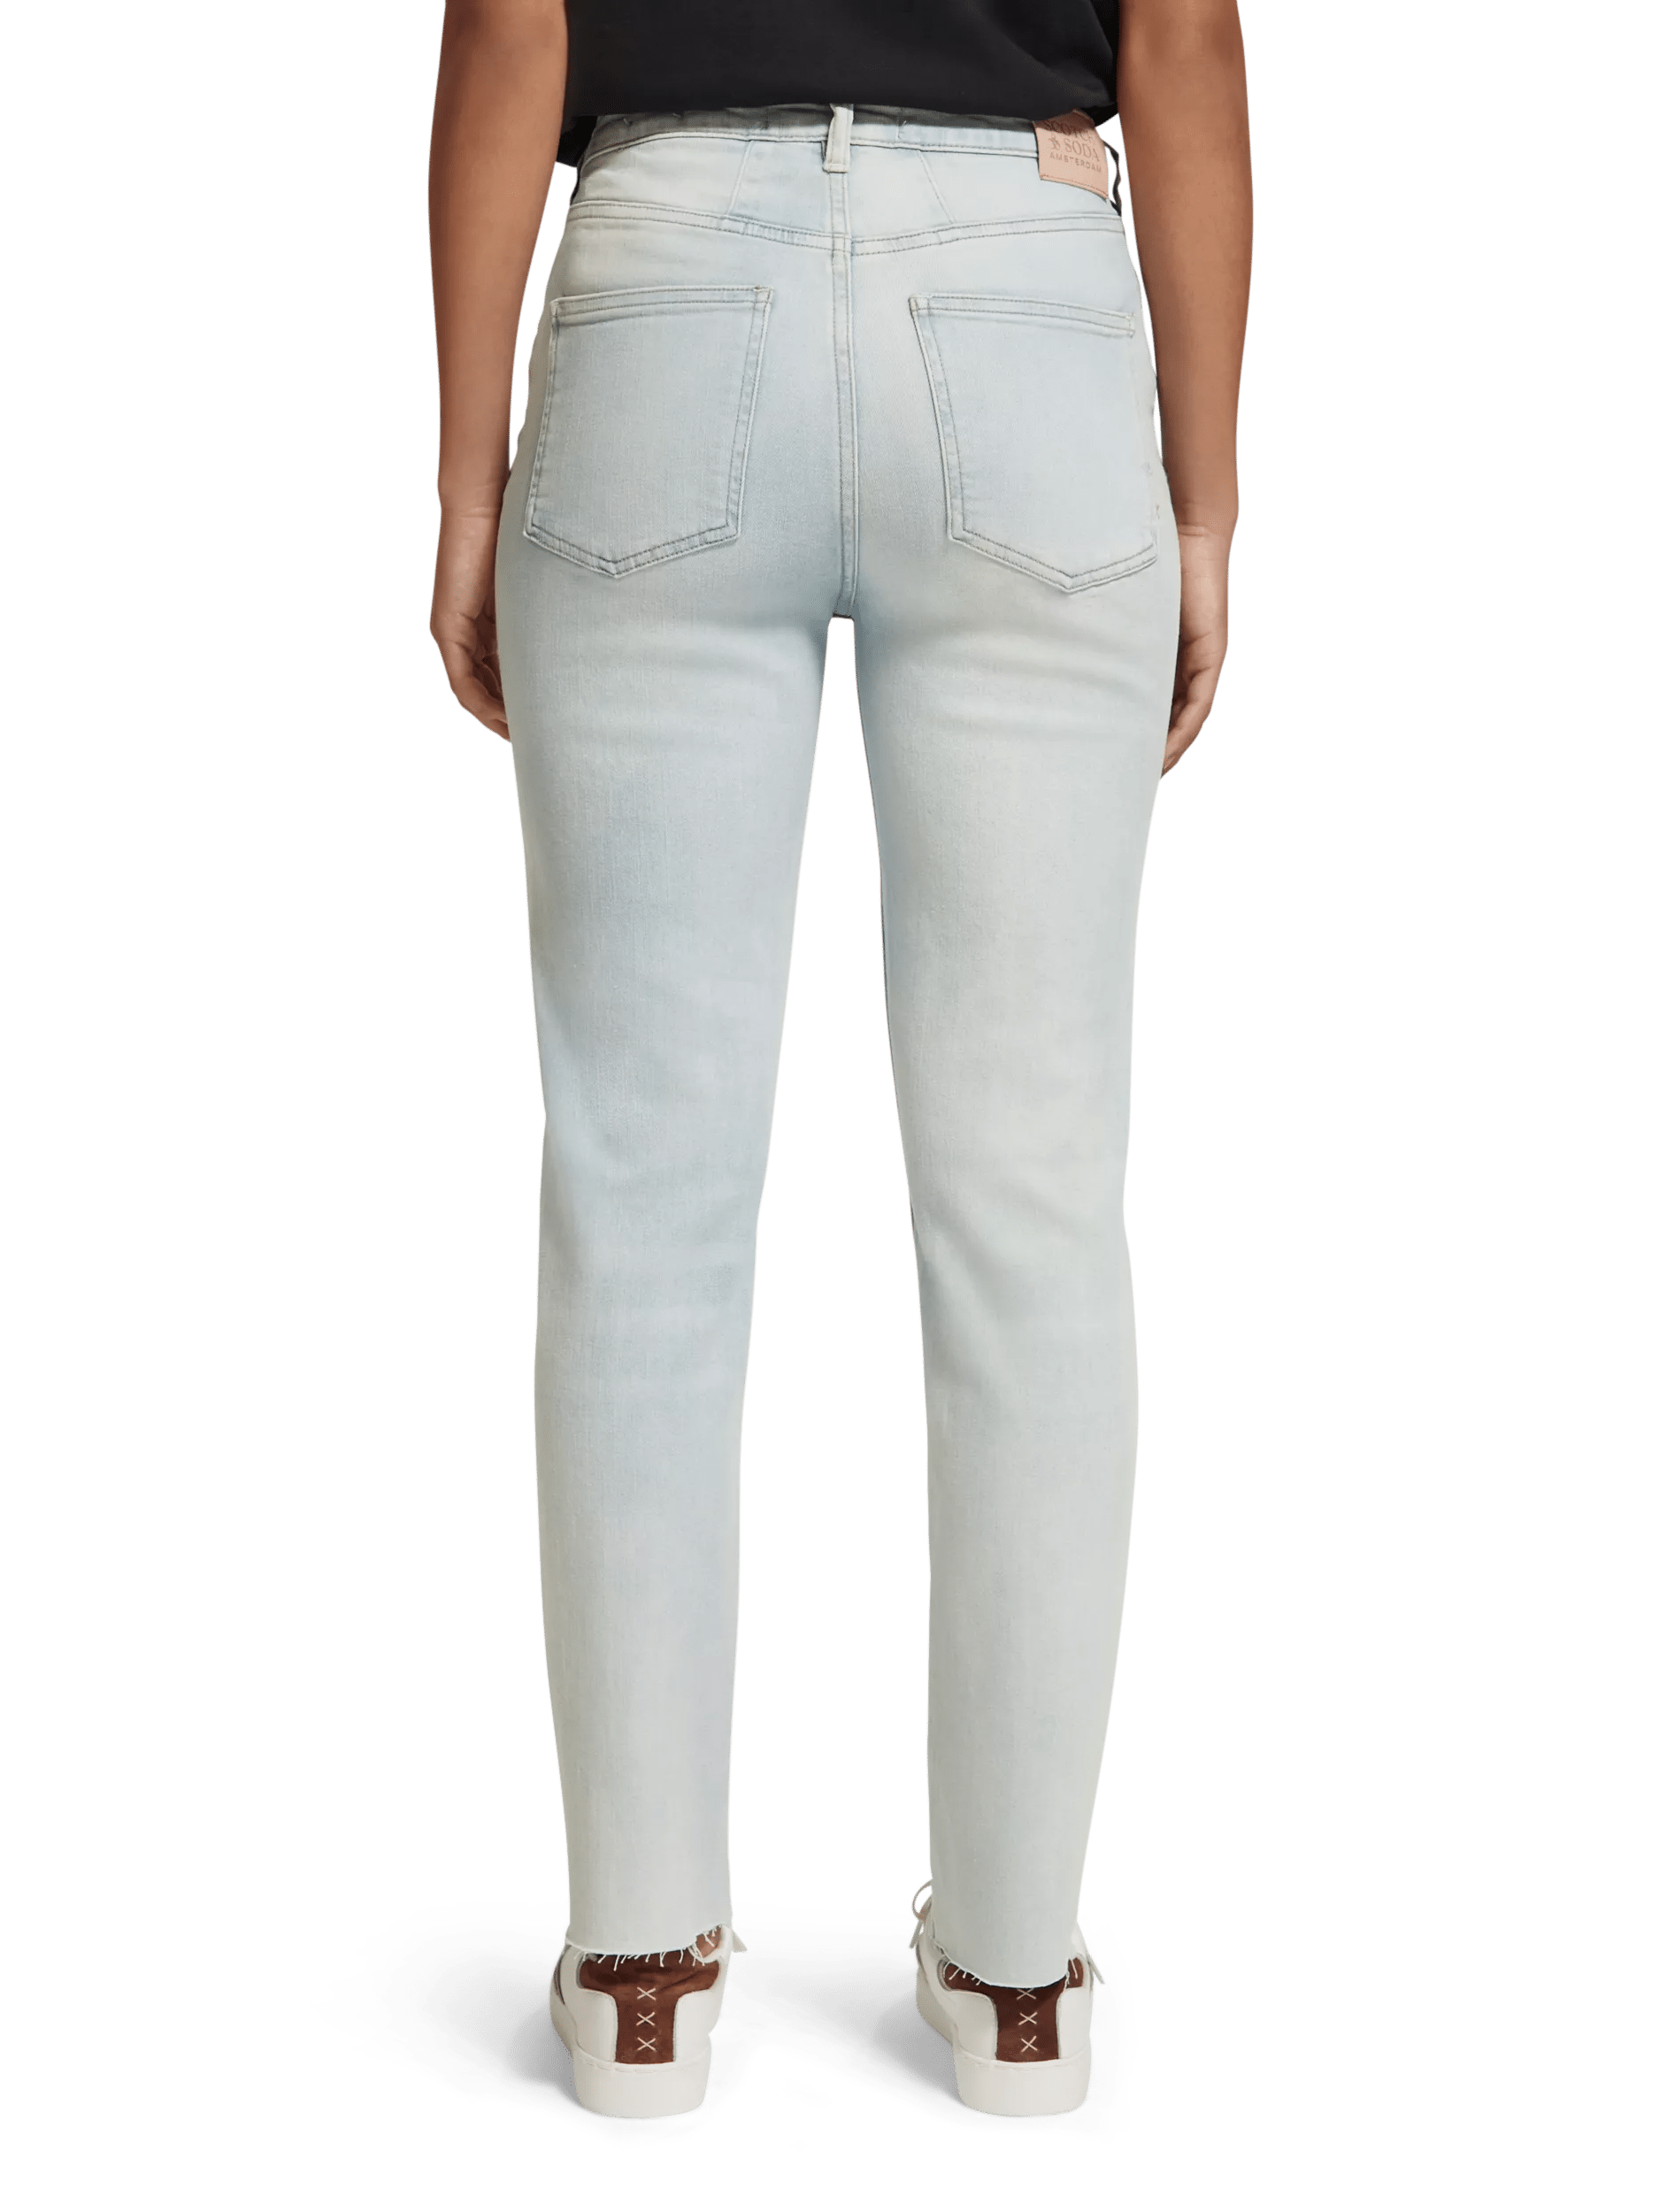 Scotch & Soda De High Five slim-fit jeans met hoge taille en taps toelopende pijpen FIT-BCK